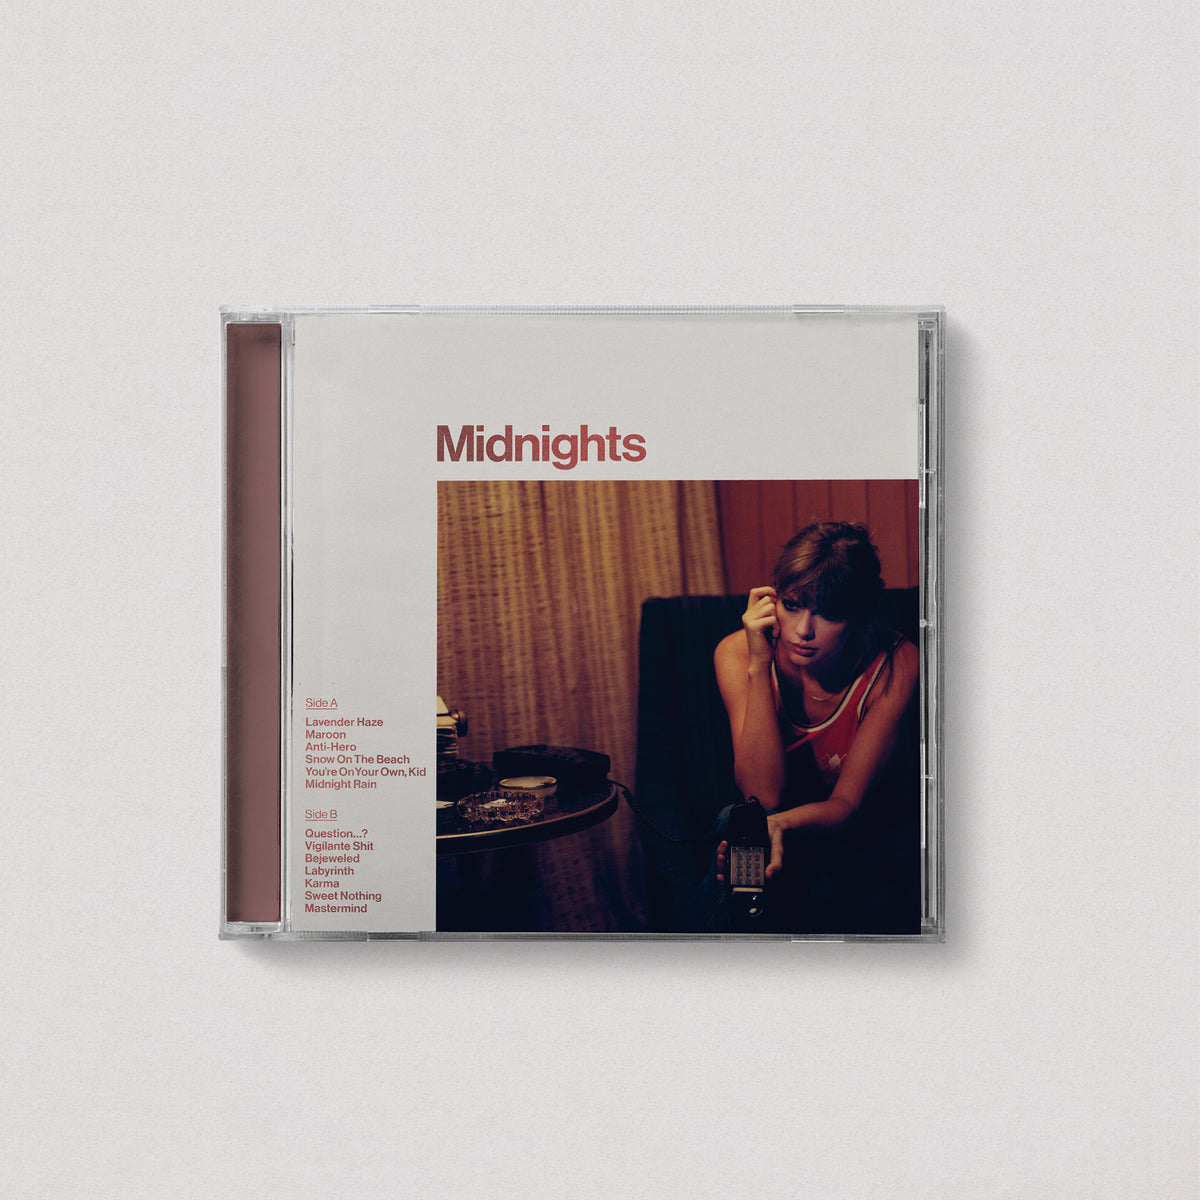 Taylor Swift - Midnights (Blood Moon Edition, CD)